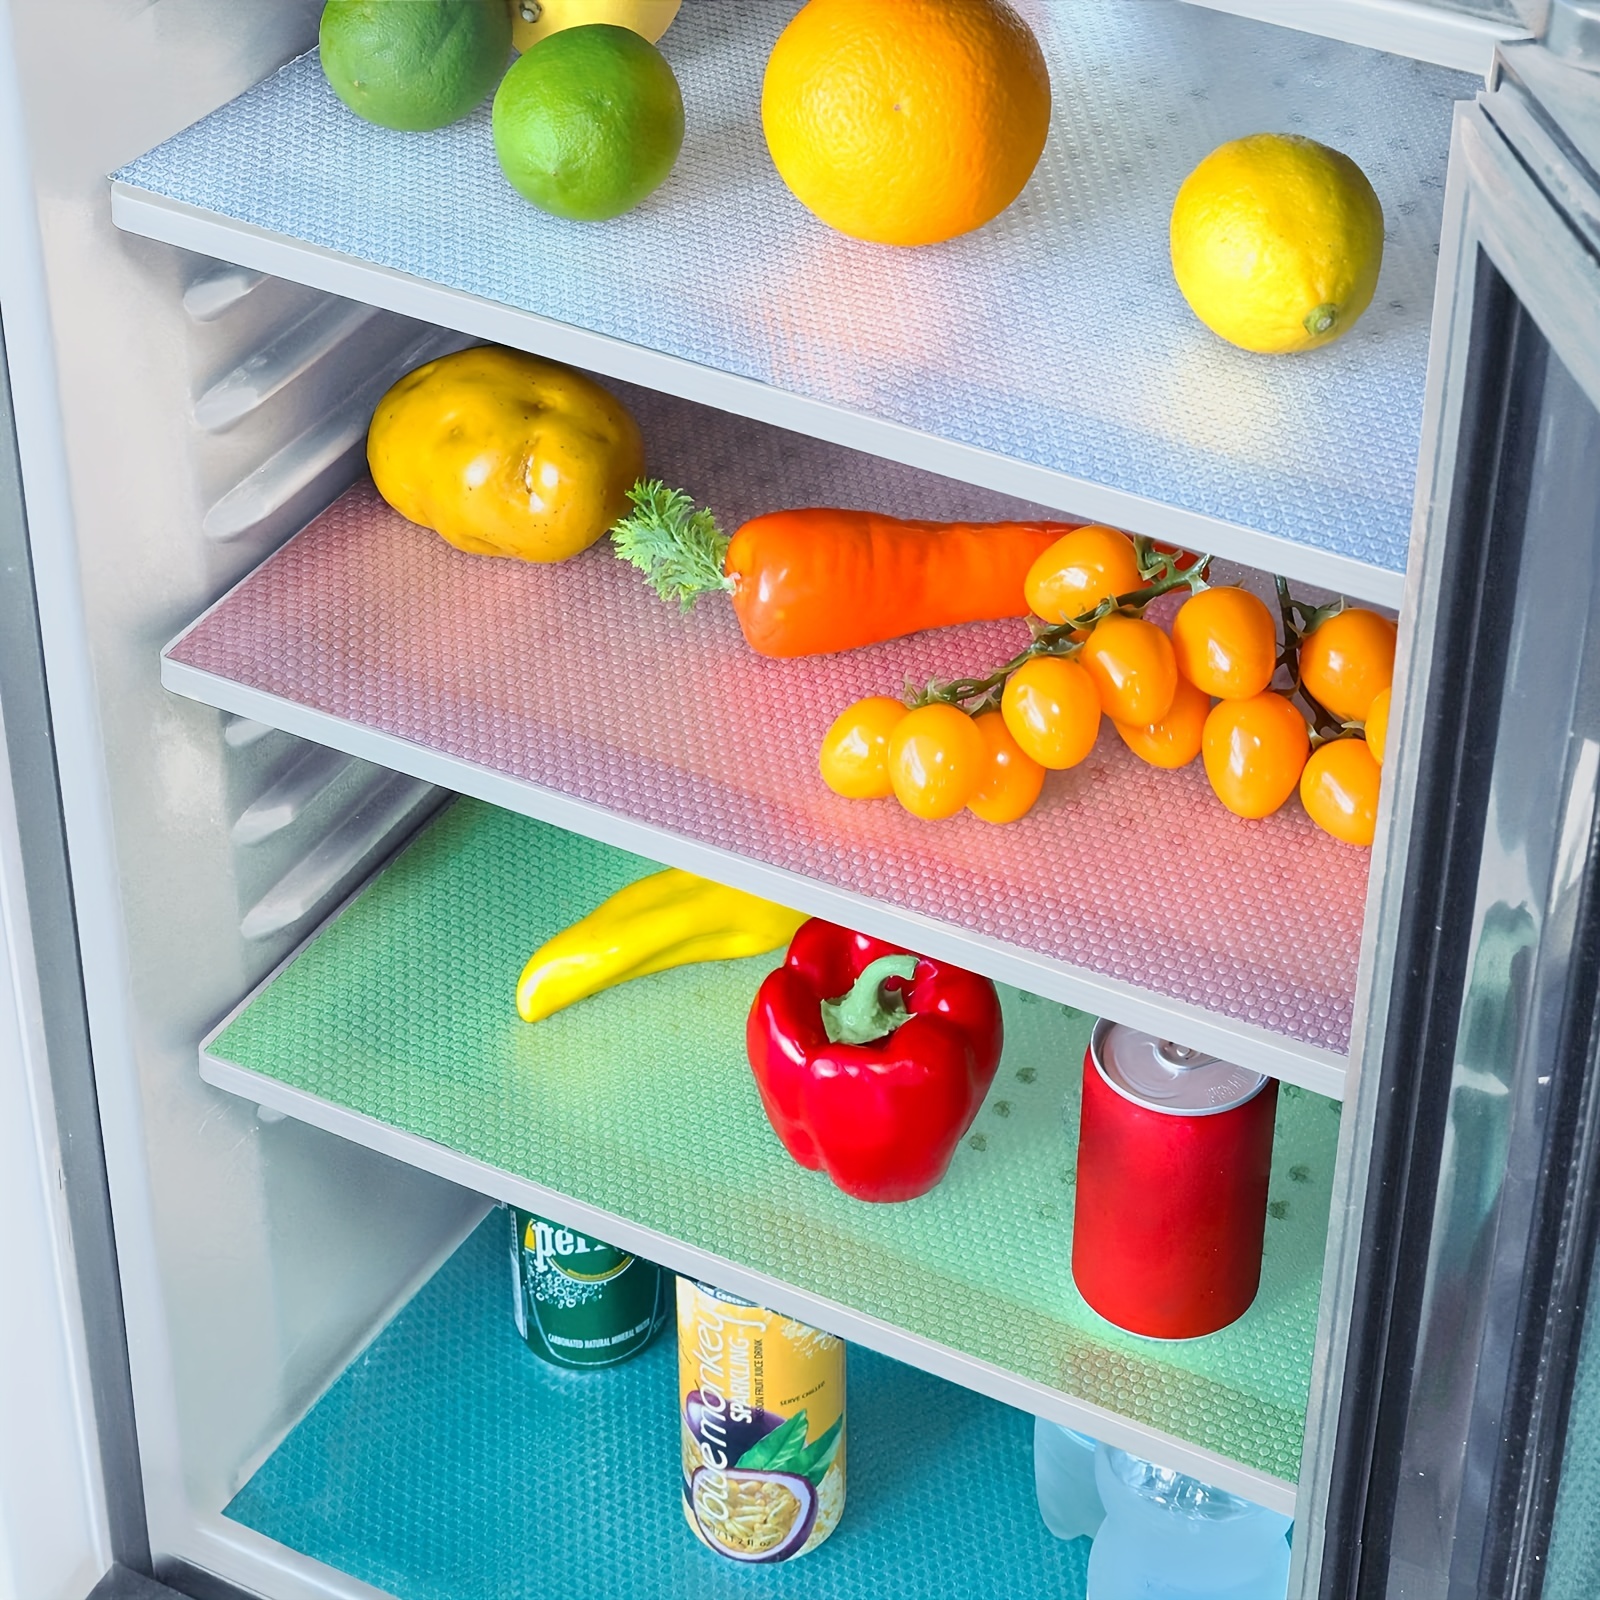 Non-Adhesive Refrigerator Mats Shelf Liners Fridge Pads Drawer Washable  Drawer Liner Refrigerator Liners